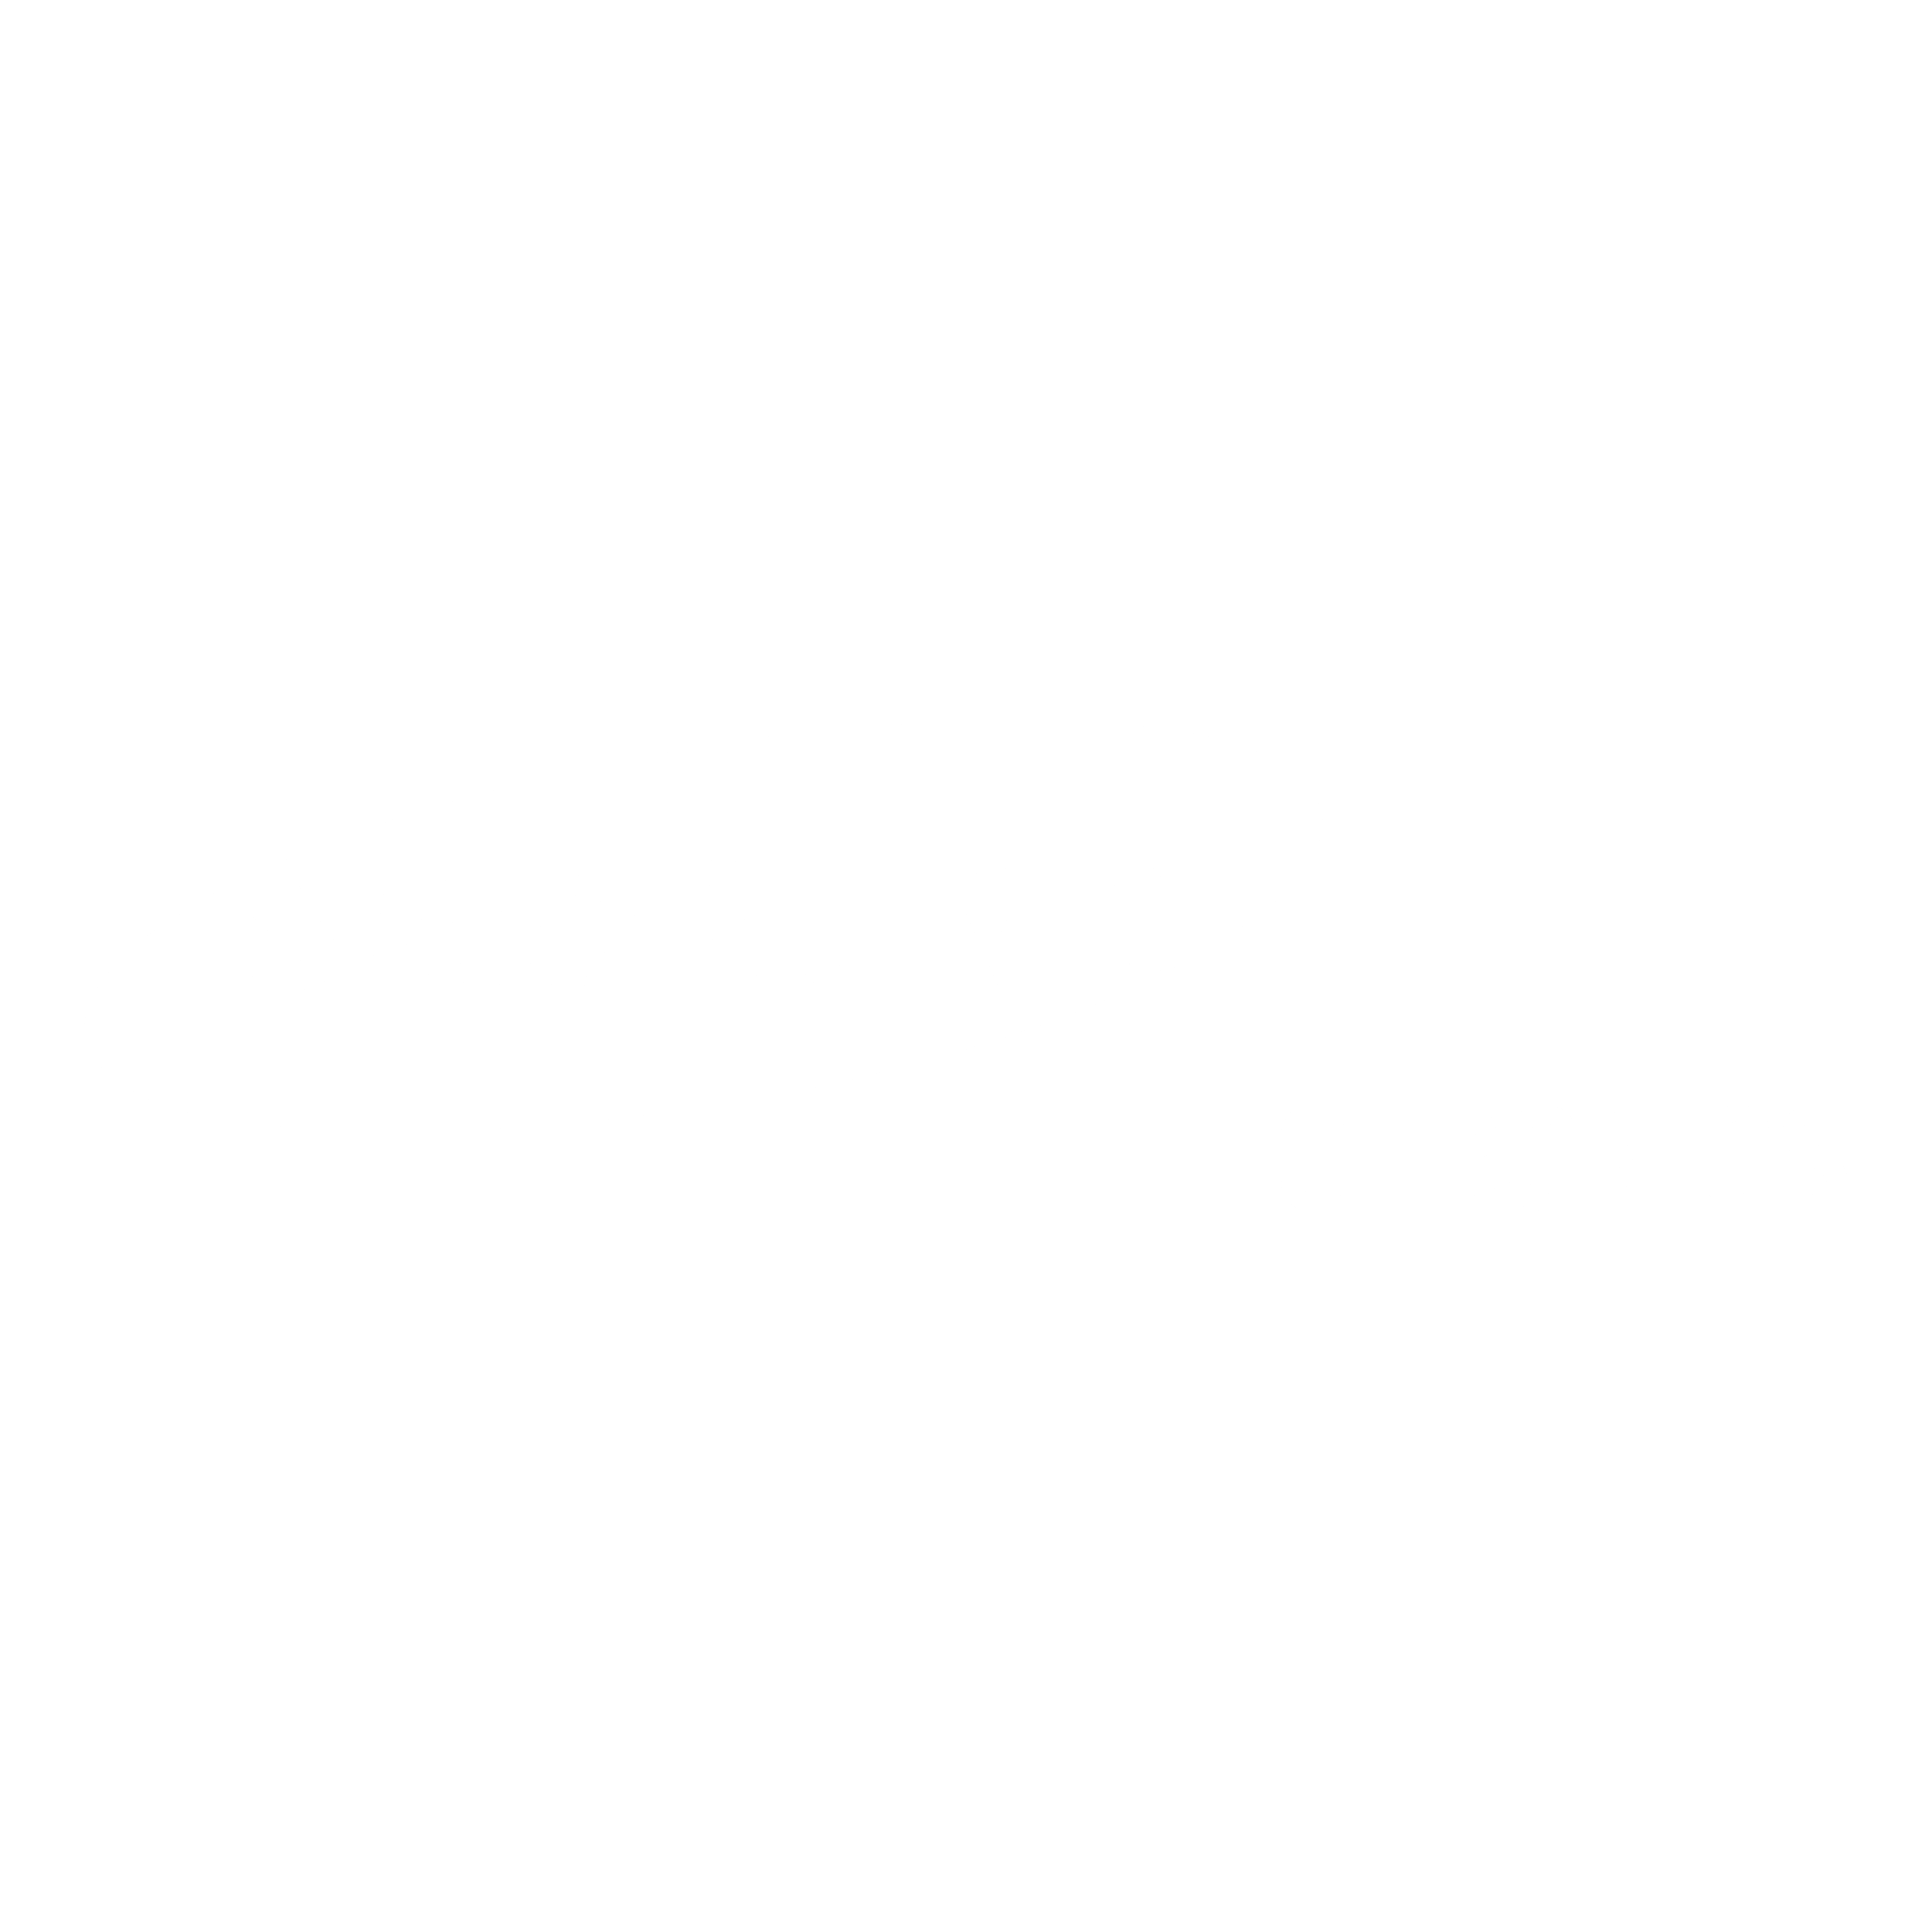 Samsung Electronics Logo - Samsung Electronics Logo PNG Transparent & SVG Vector